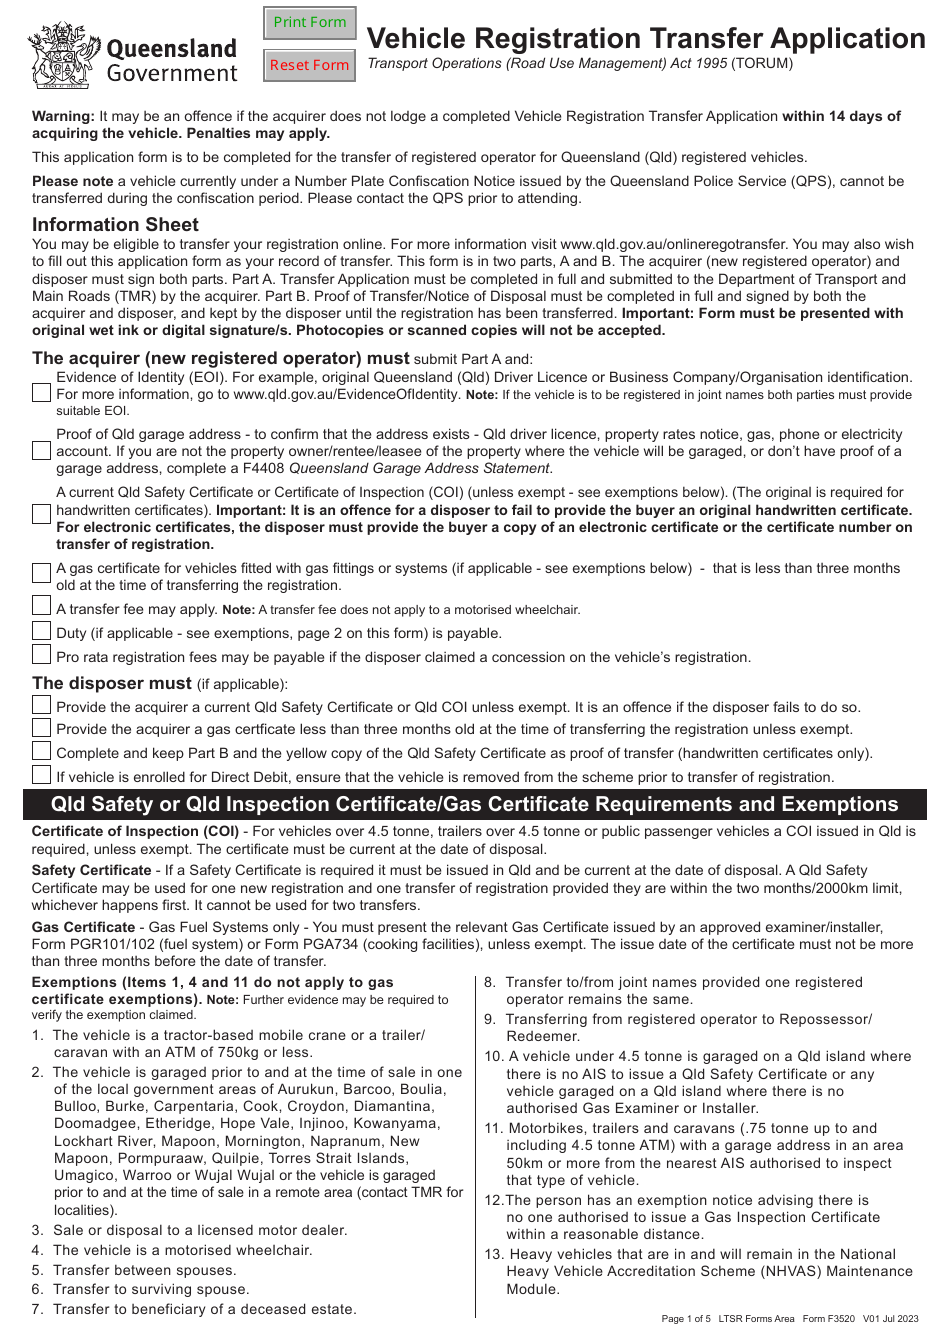 Form F3520 Vehicle Registration Transfer Application - Queensland, Australia, Page 1